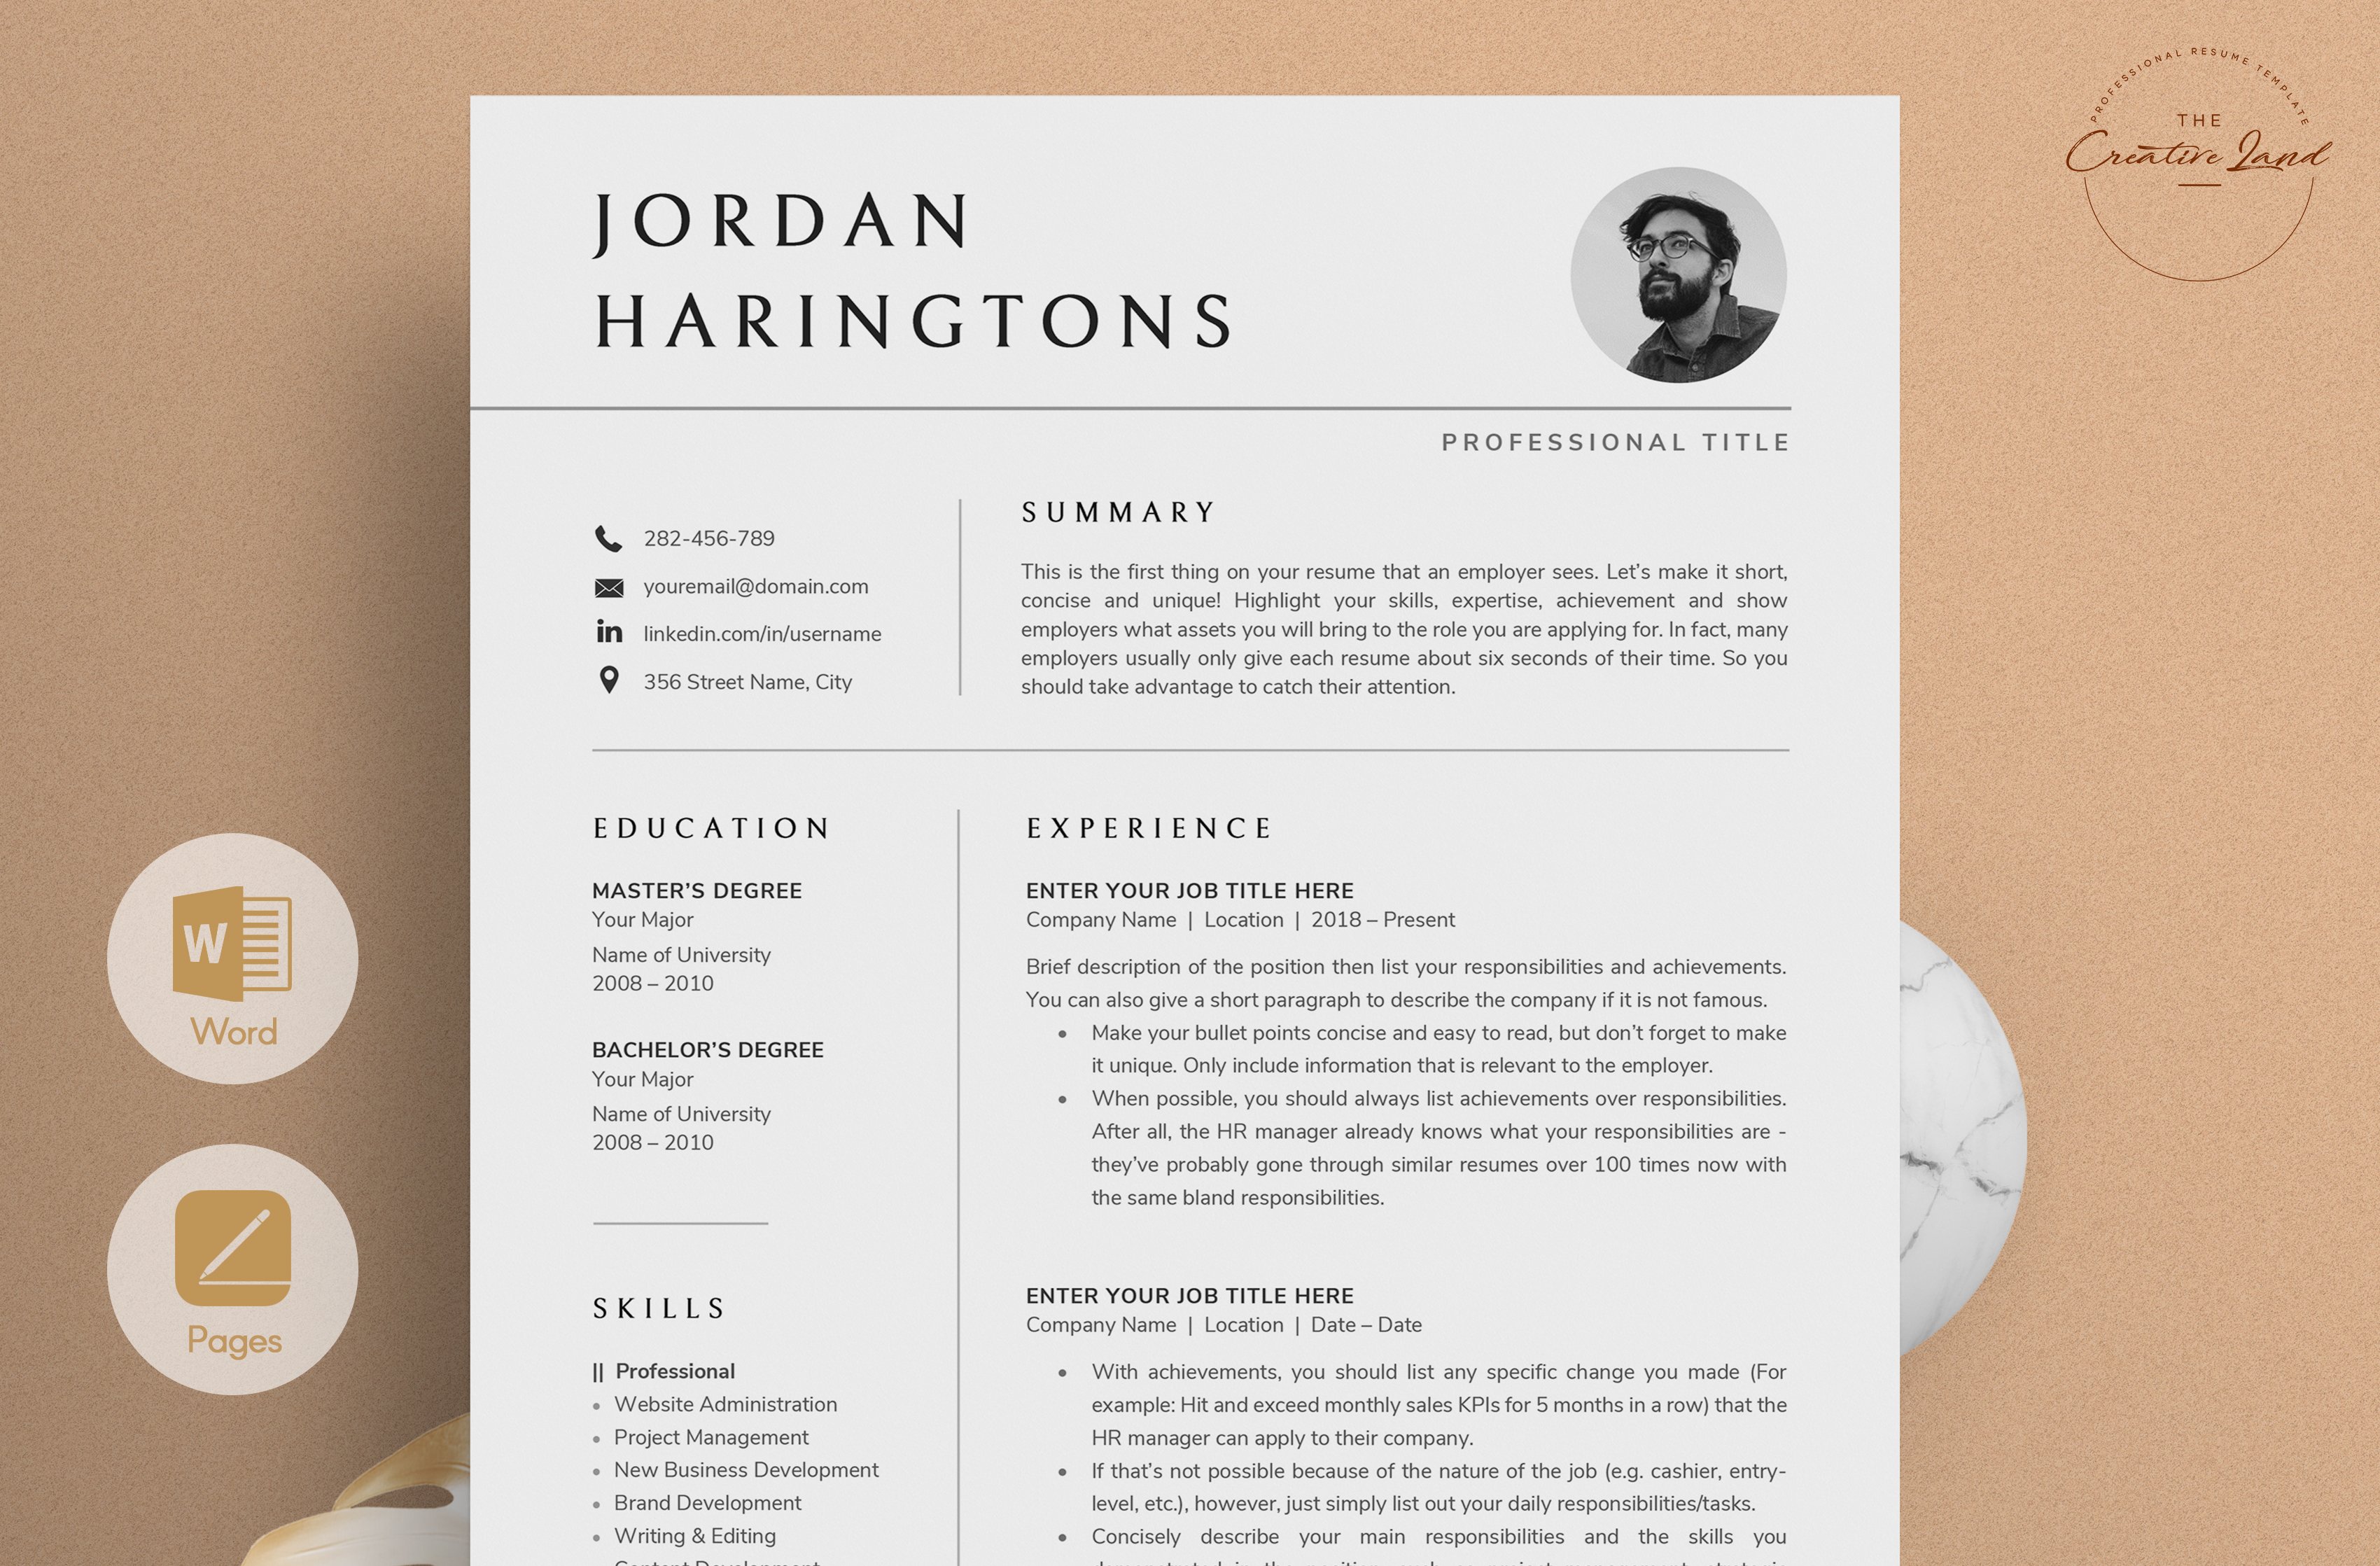 Resume/CV - The Jordan cover image.